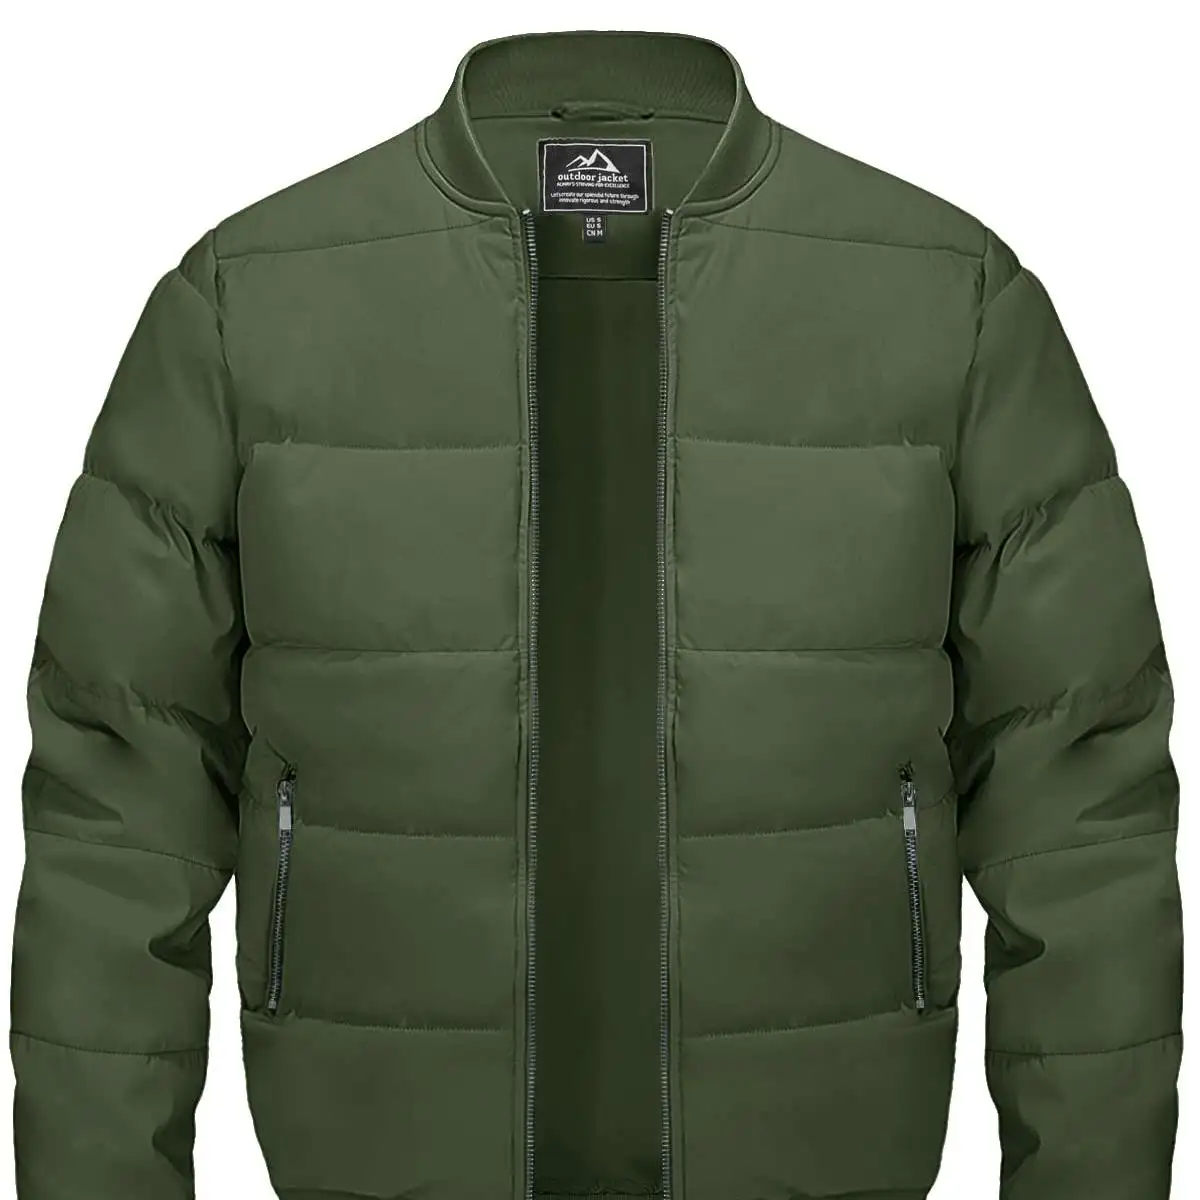 Herren Winter Bomber Jacke geste ppte Full Zip Up Wind dichte warme Mantel Arbeit Casual Athletic Jacket 3 Taschen